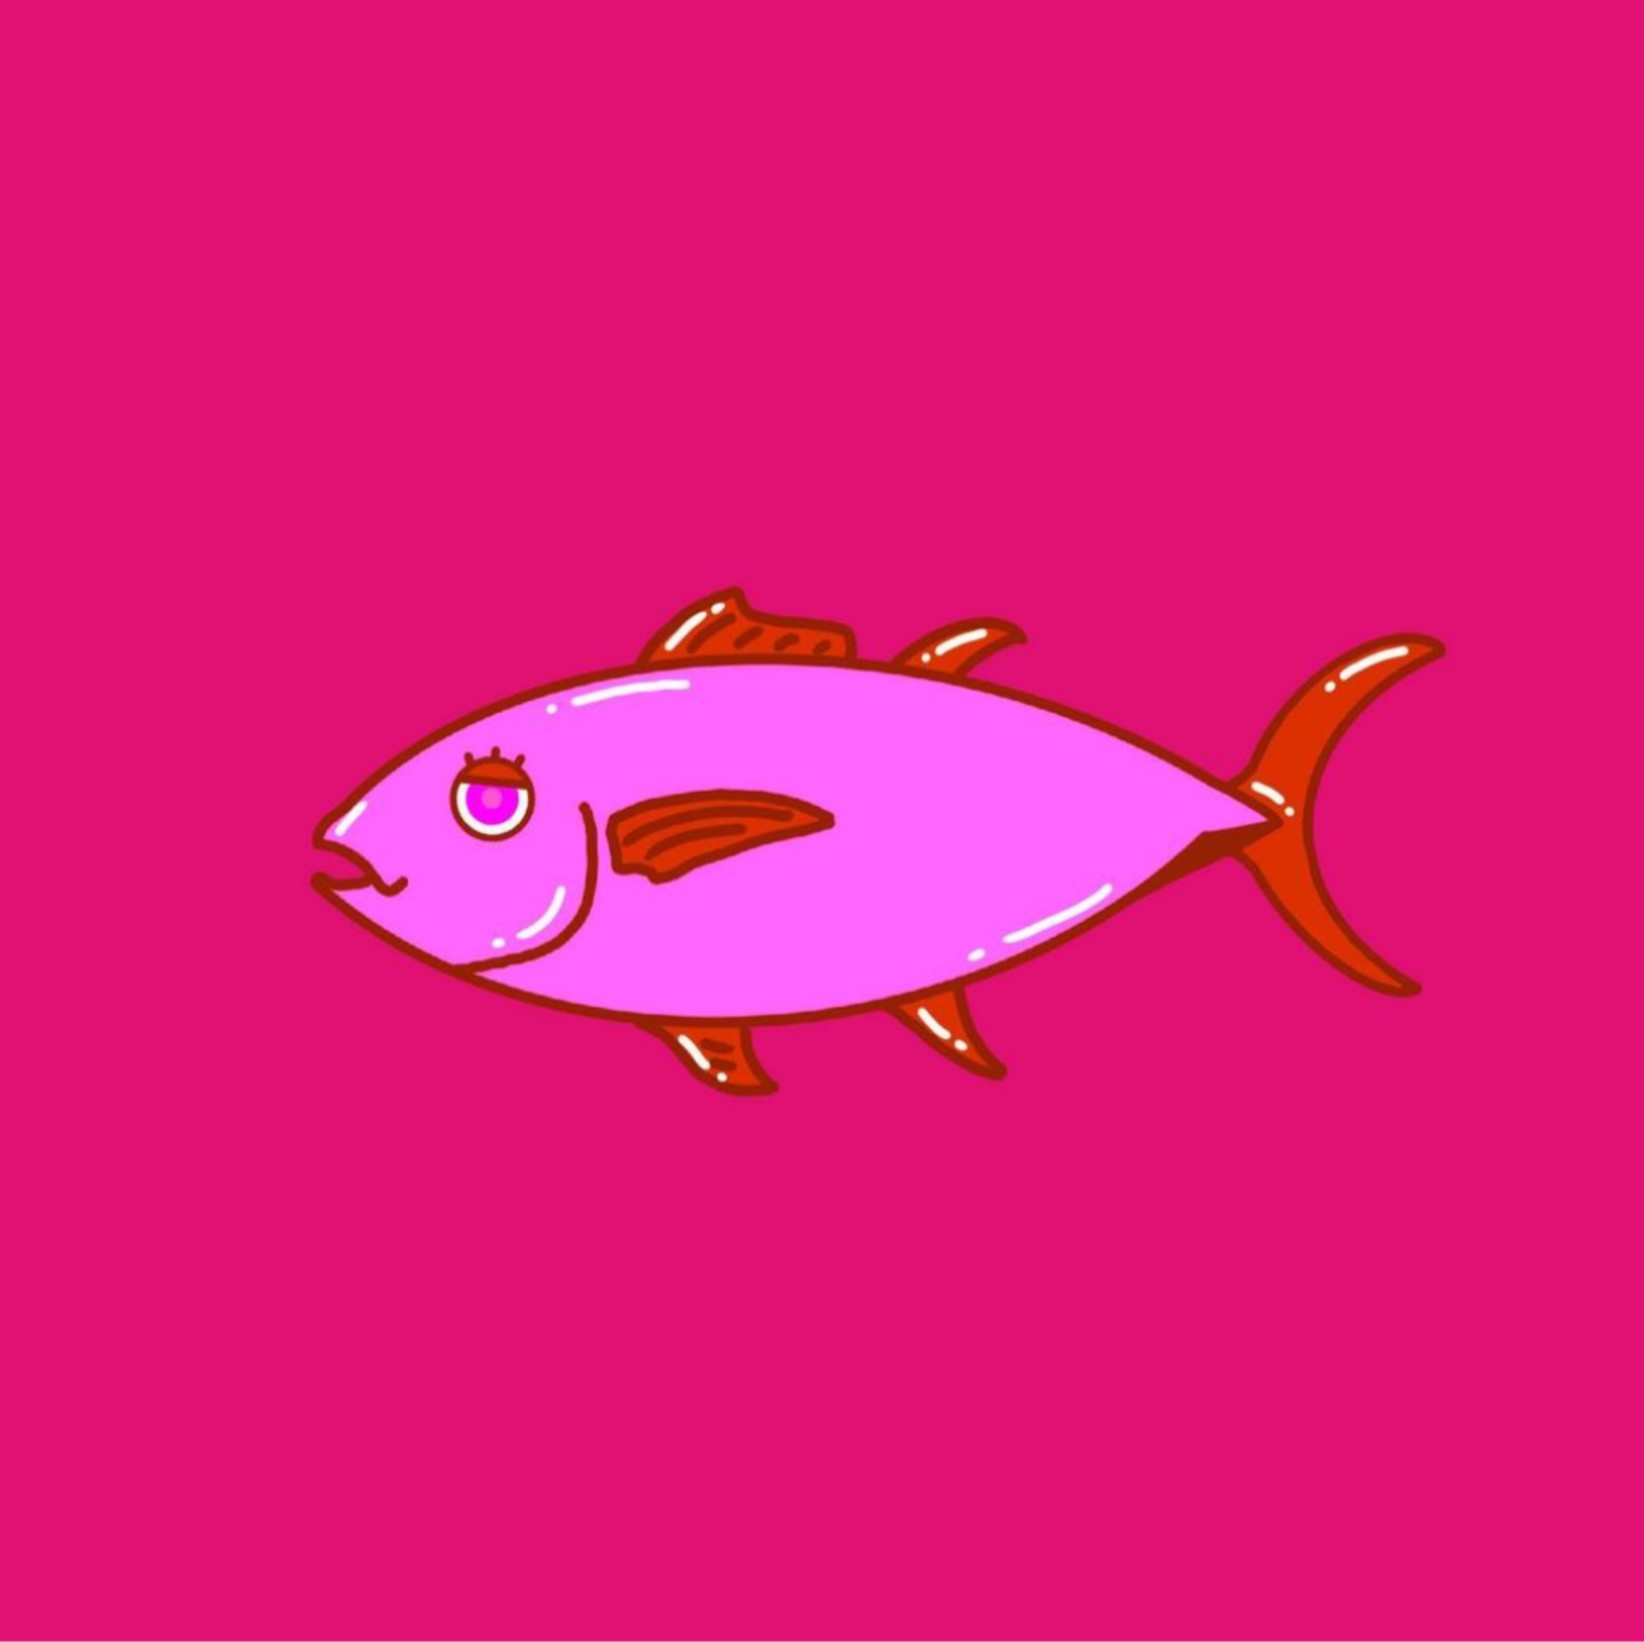 Octentry 今日のイラスト かわいいお魚ちゃん おしゃれ お魚 魚 さかな イラスト イラスト好きな人と繋がりたい 絵師さんとつながりたい ストリートファッション T Co Yvflsockwi Twitter